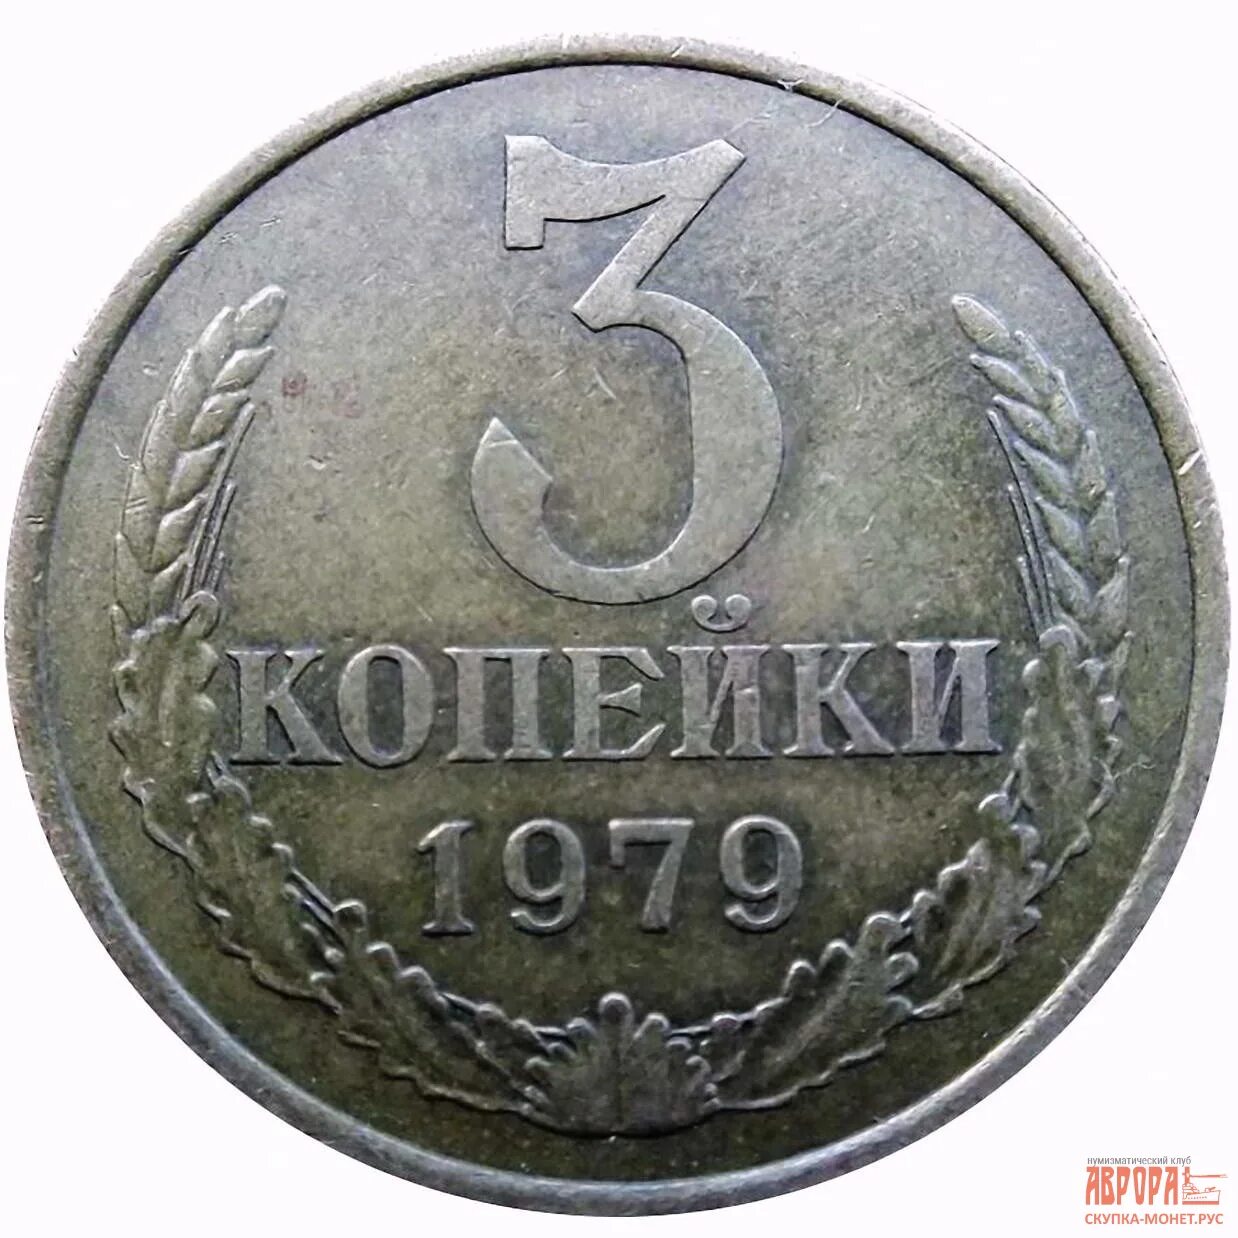 3 Копейки 1979 год монета СССР. Реверс монеты 3 копейки. Копейки СССР 1979 года. Аверс 3 копеек.